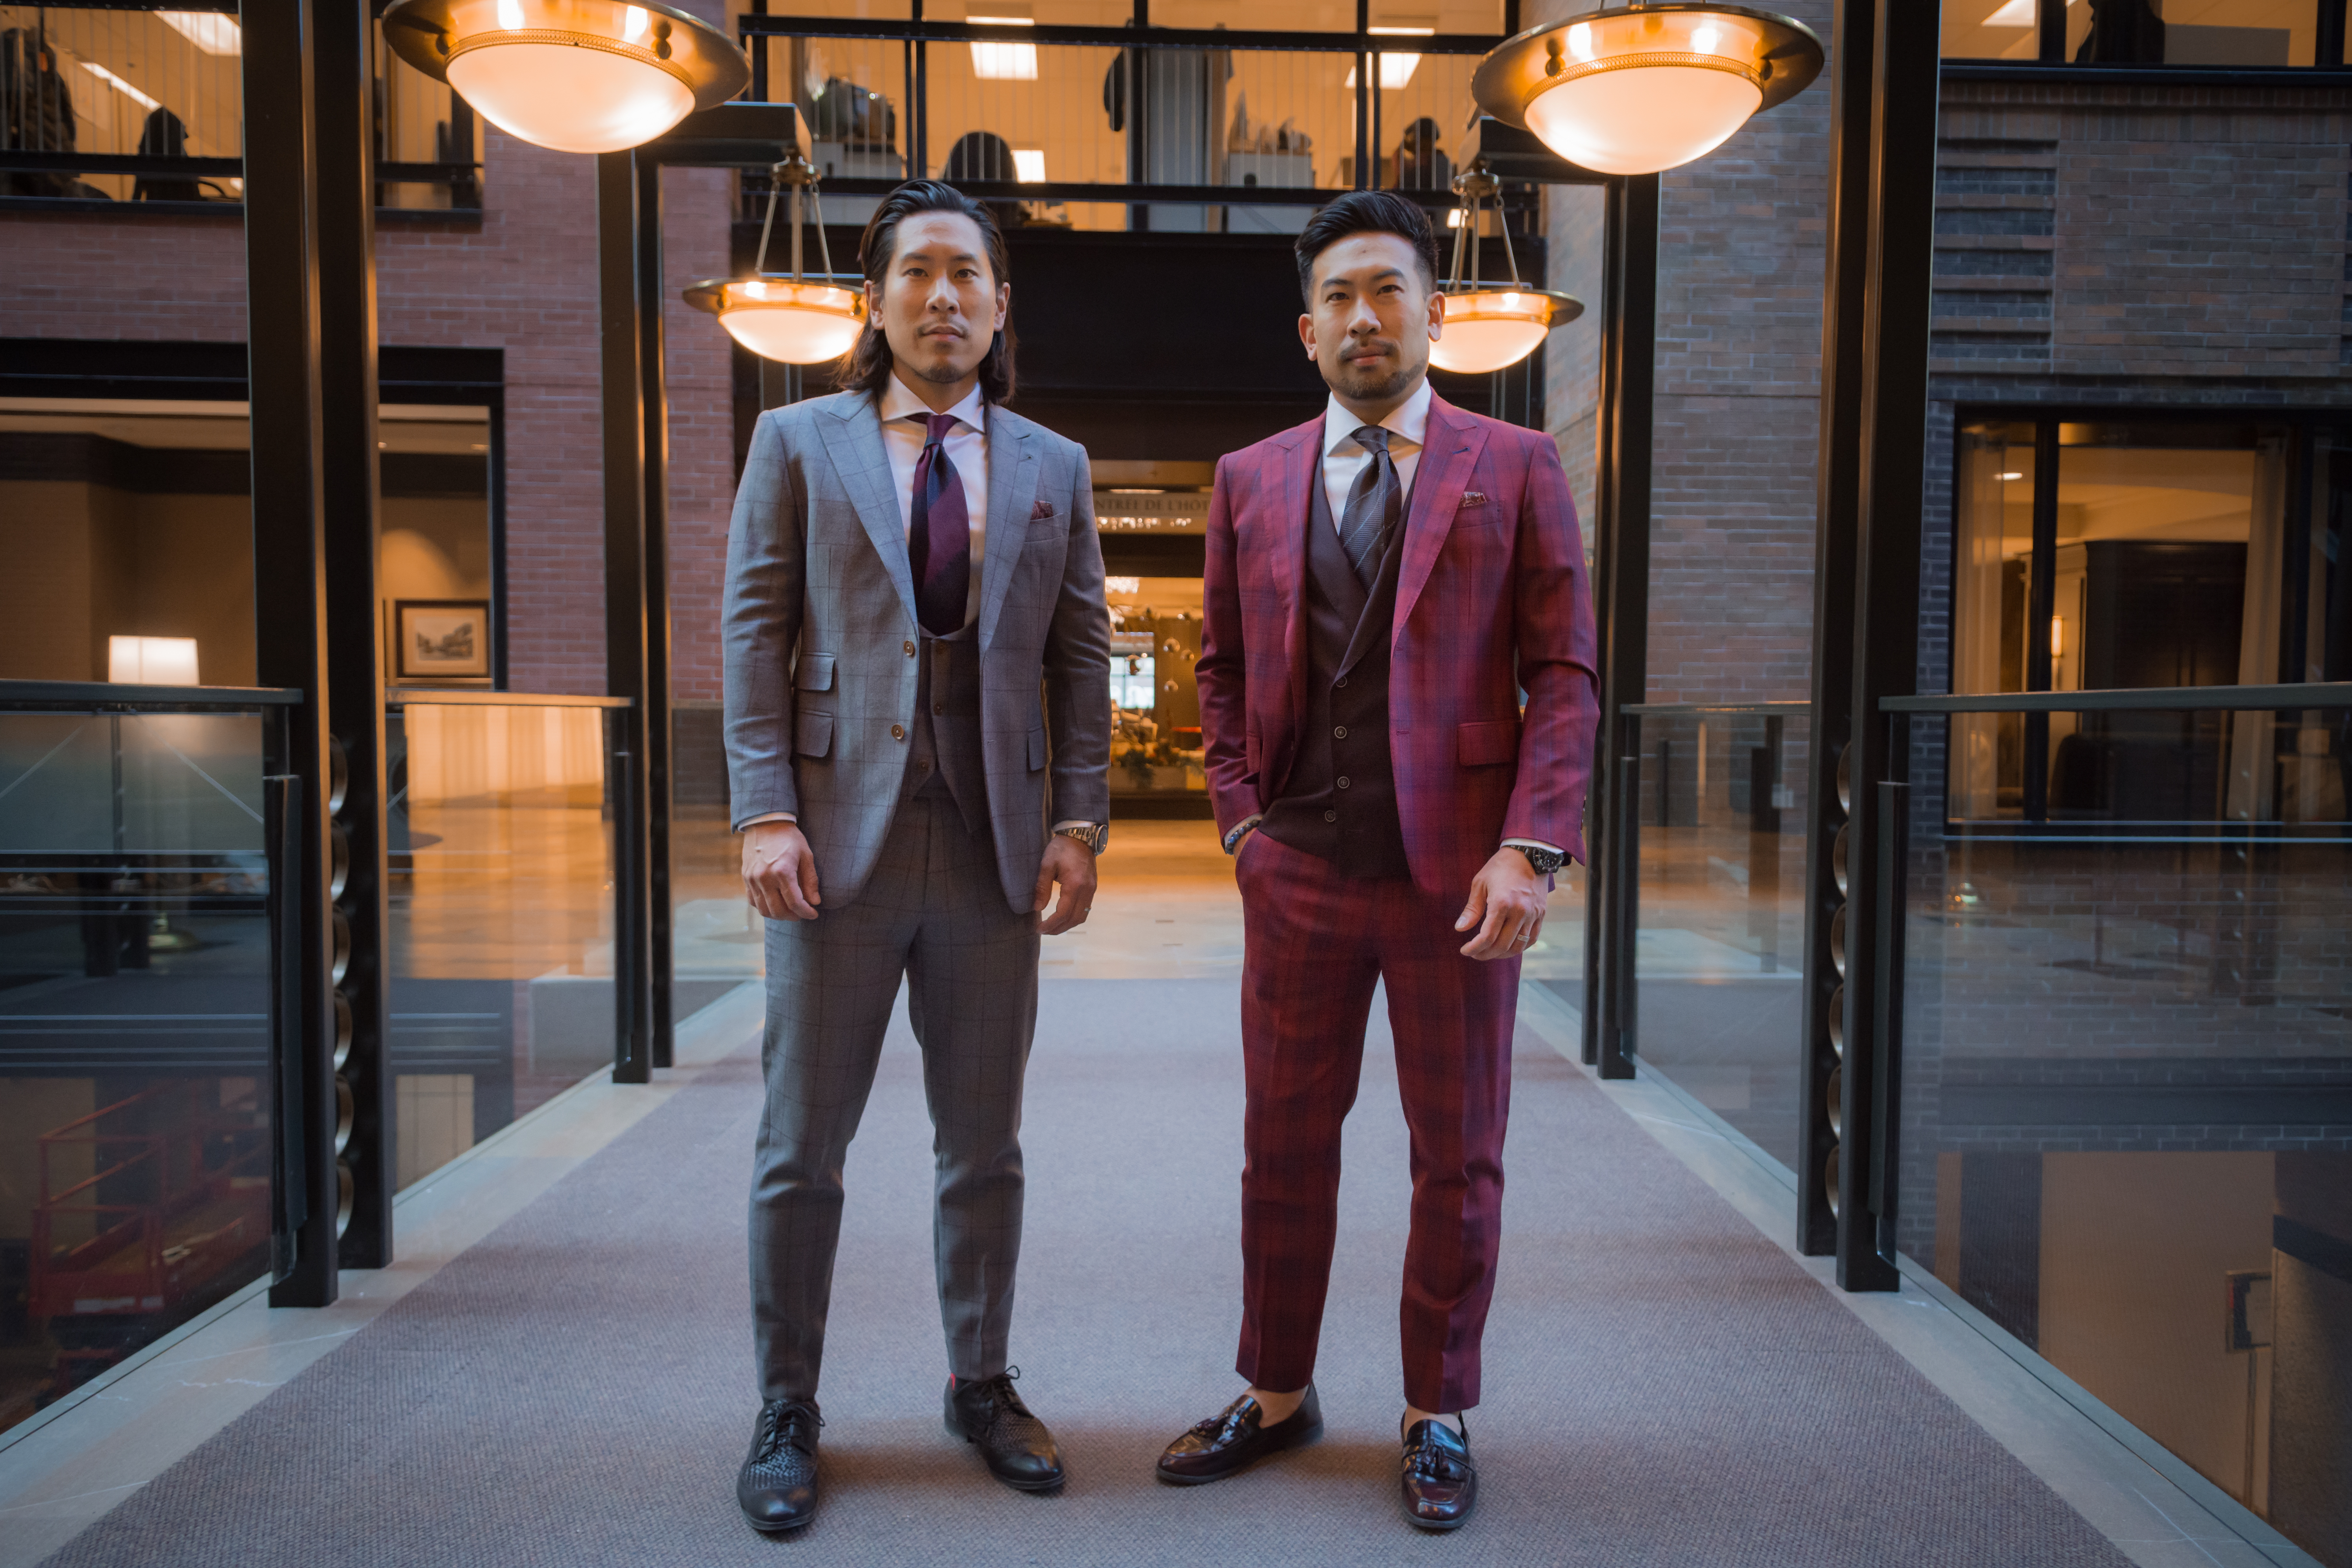 Business Suit - Universal Tailors